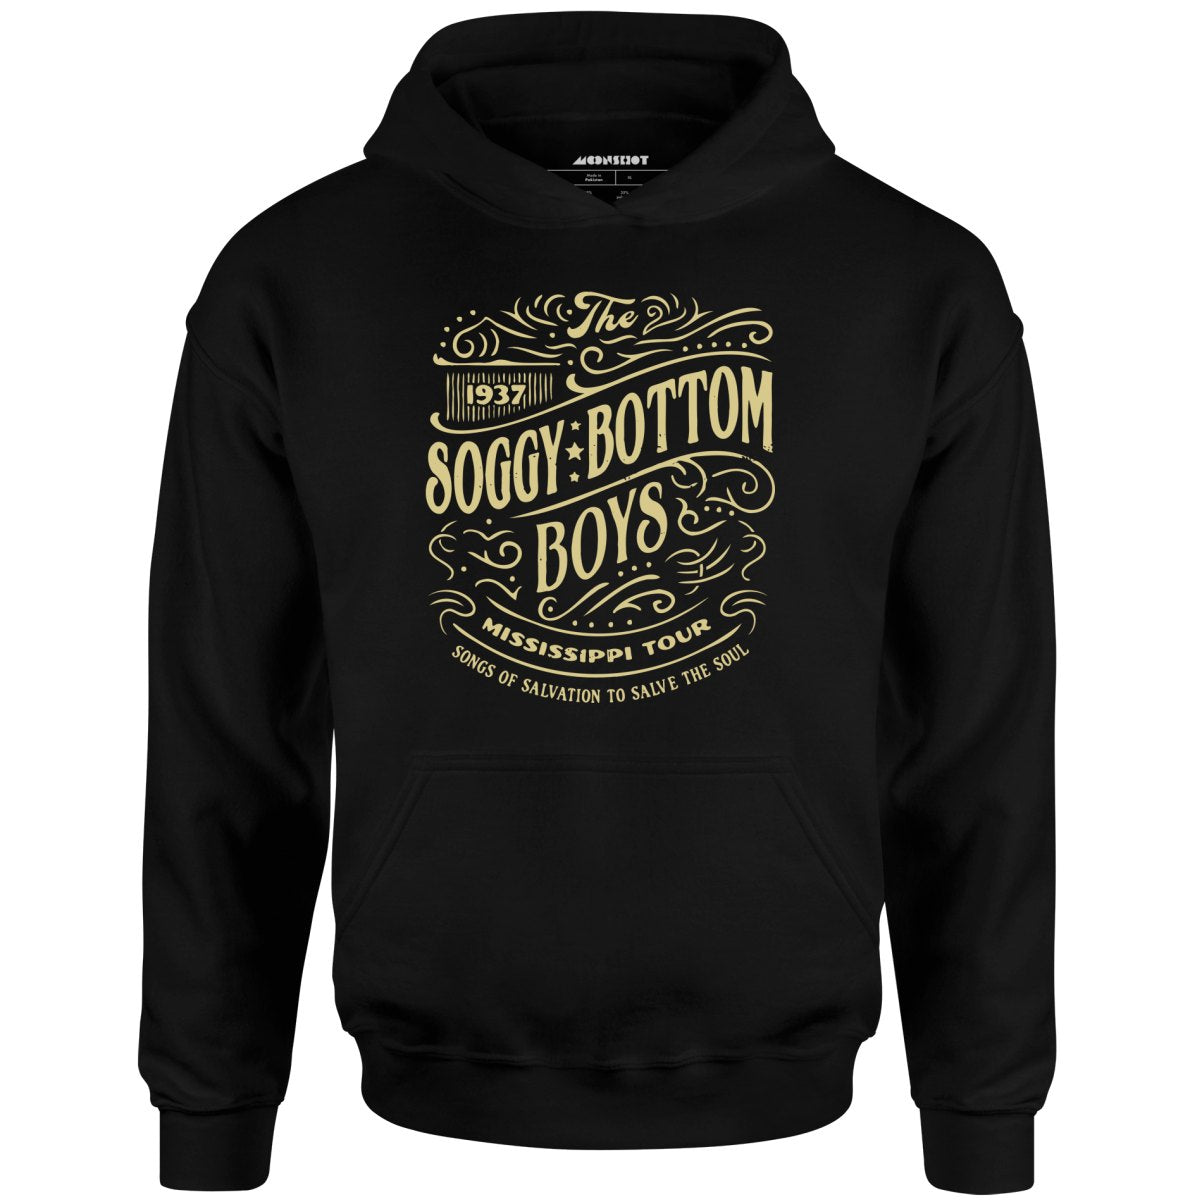 Soggy Bottom Boys - 1937 Mississippi Tour - Unisex Hoodie